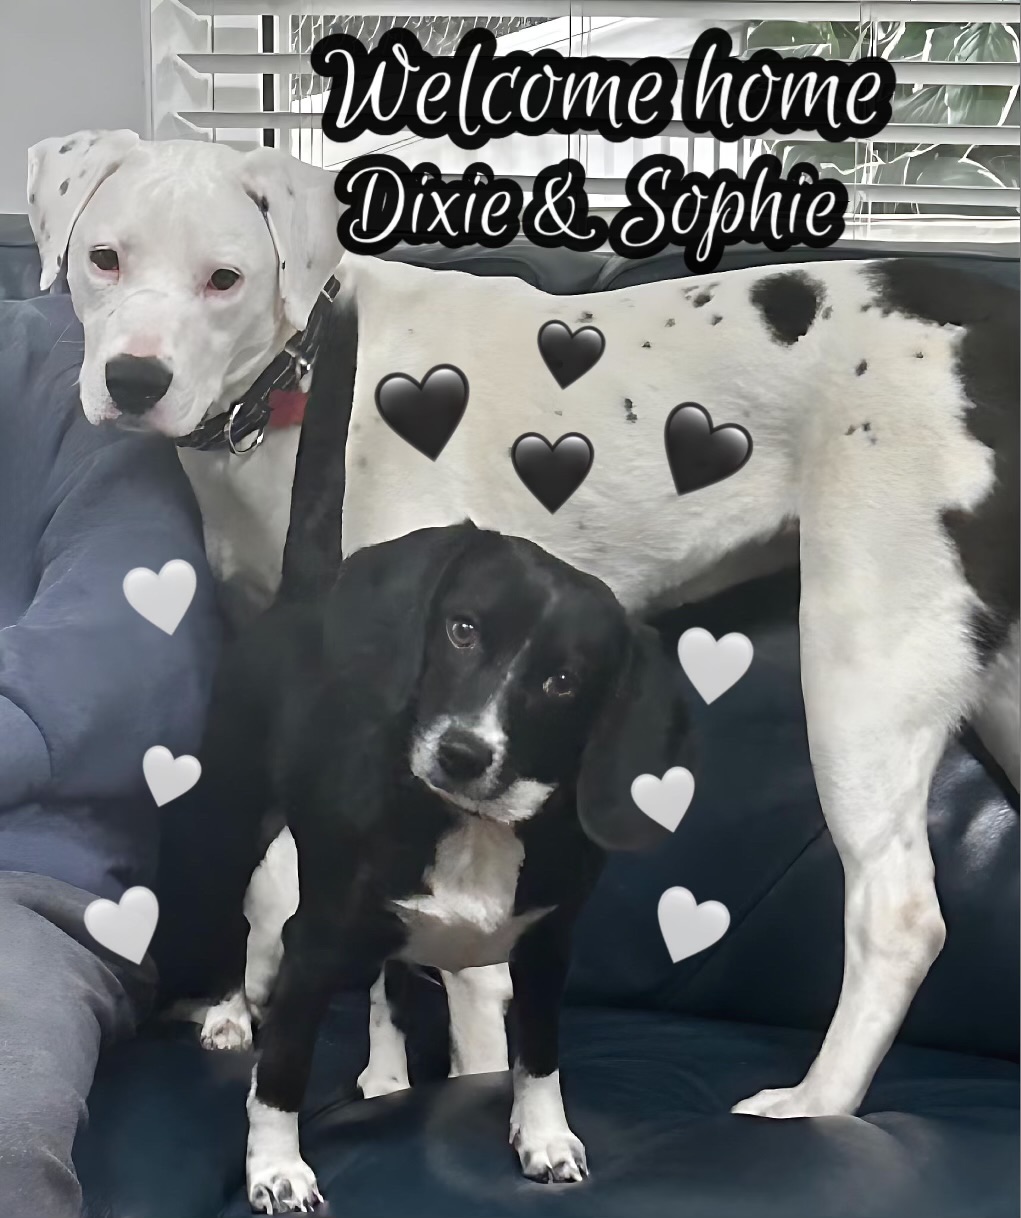 Sophie & Dixie Home